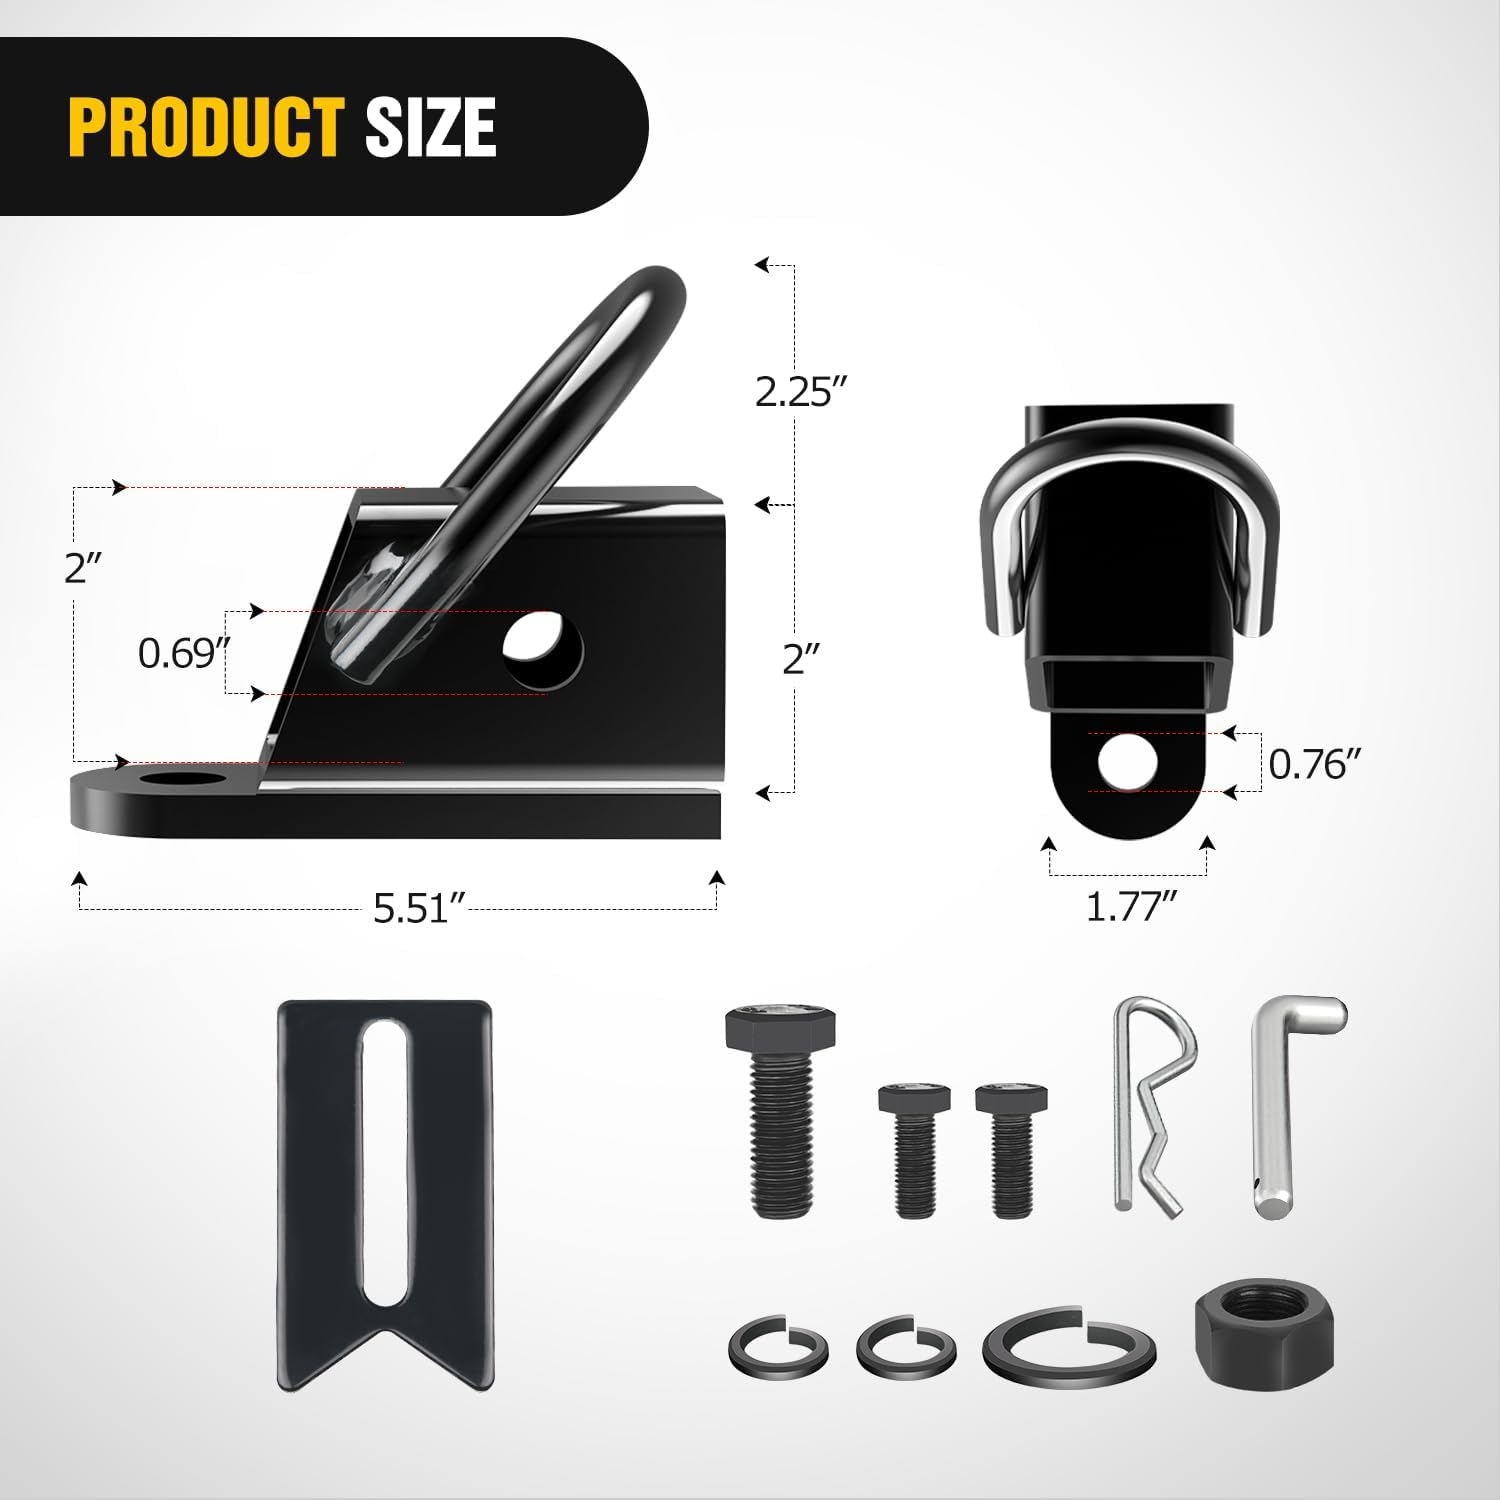 2" Rear Trailer Hitch Receiver Kit for ATV UTV Rear Bumper Tow Hook Black Hitch Cover Kit Nilight